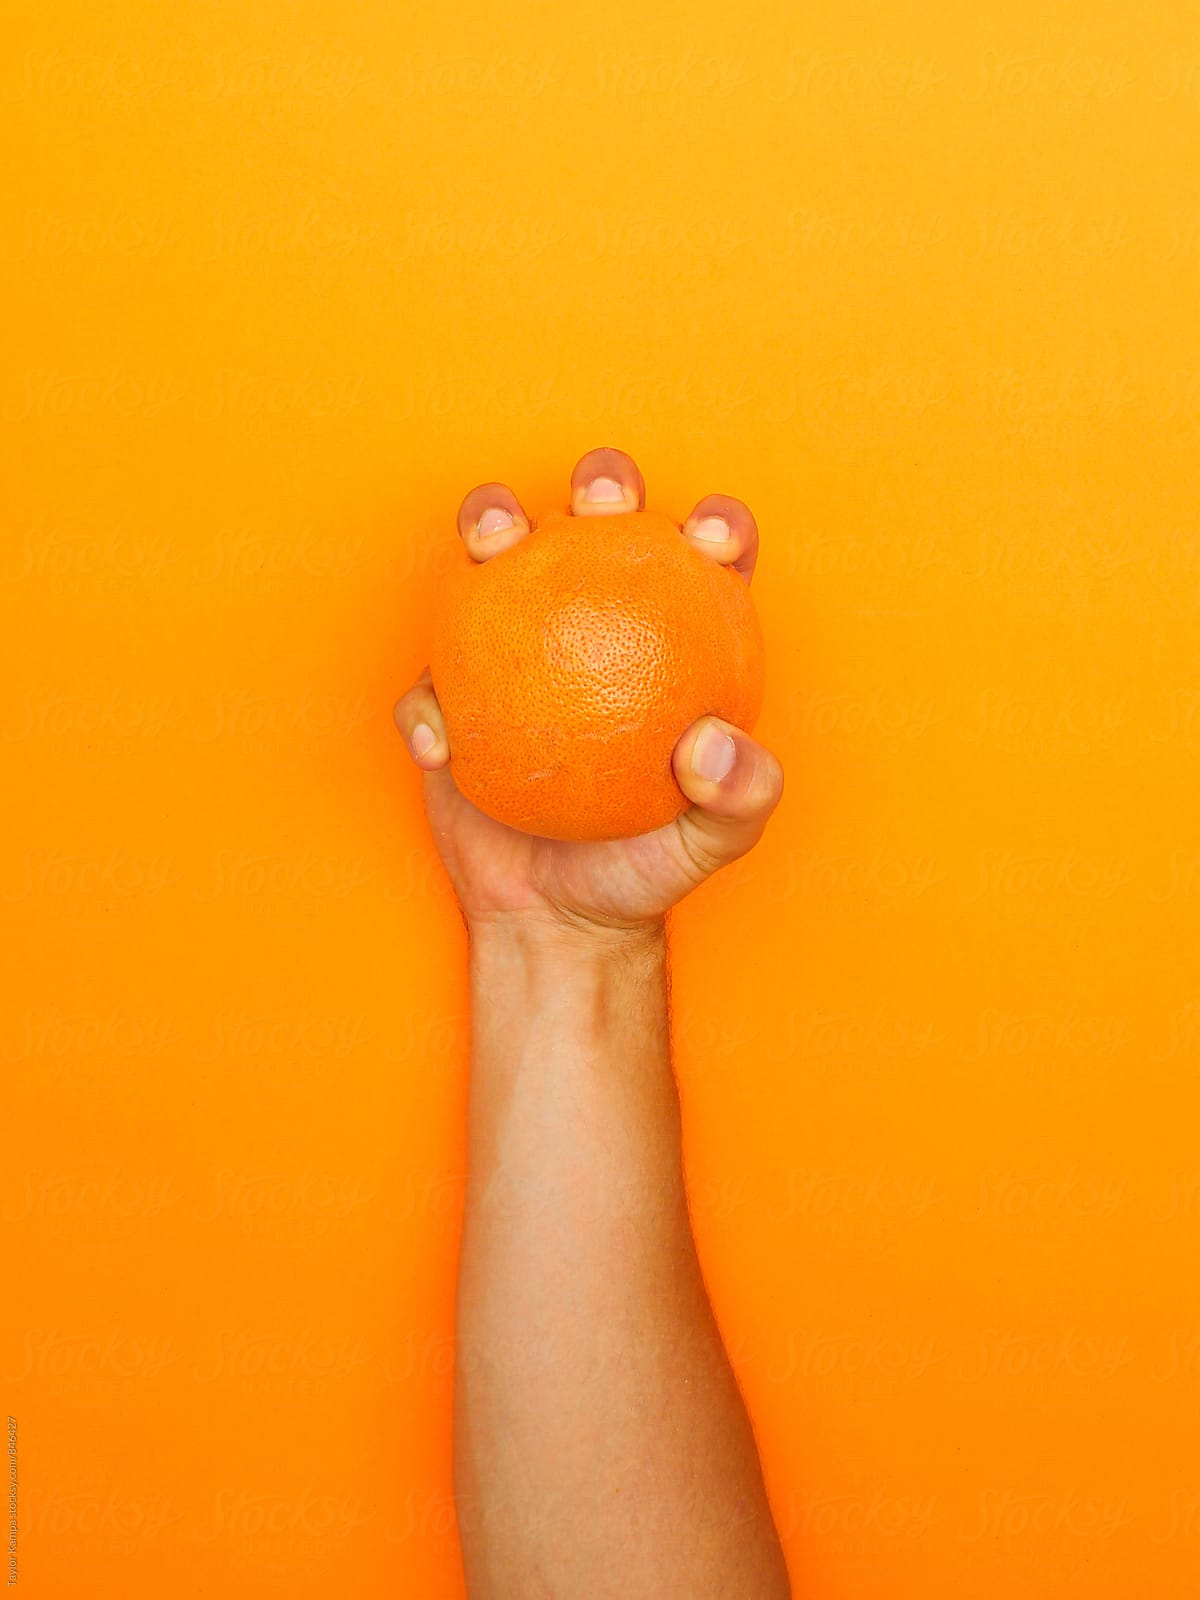 Here's an Orange